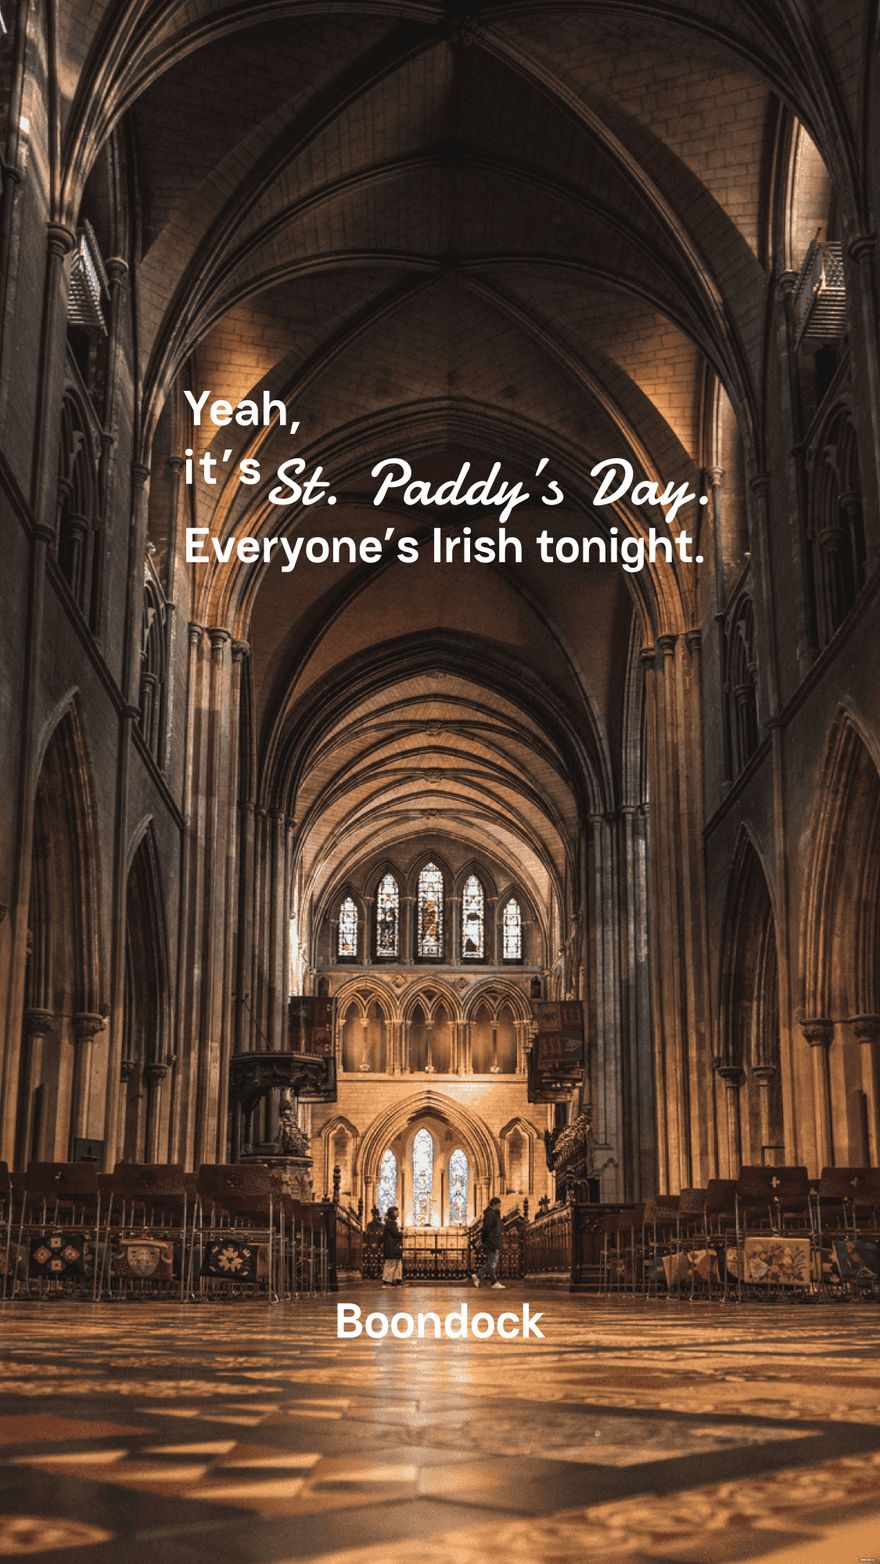 Free Boondock - Yeah, it’s St. Paddy’s Day. Everyone’s Irish tonight.